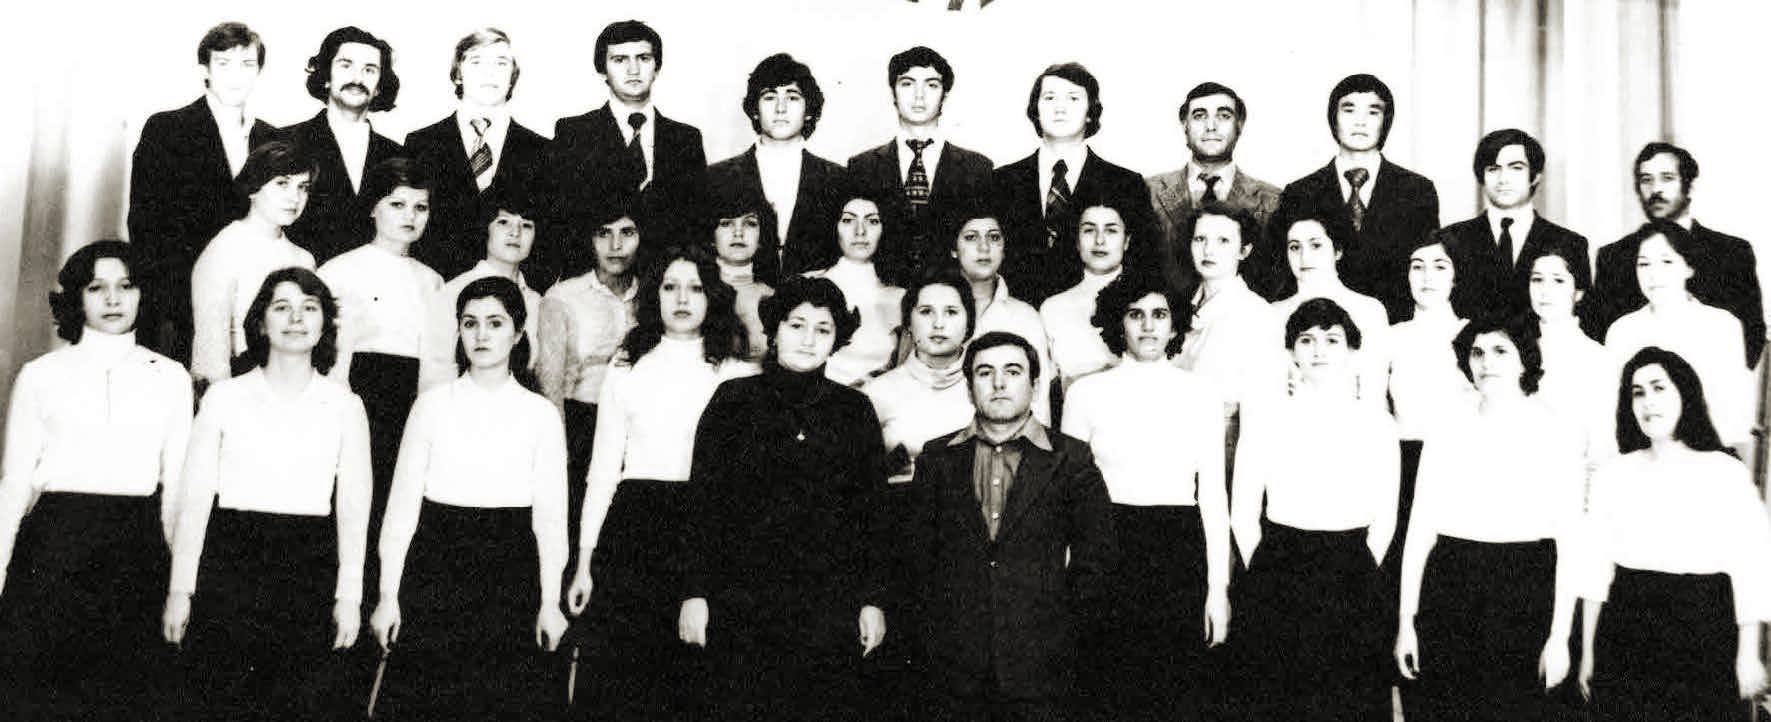 Хор училища, конец 70-х, руководители Абдулгамидова Н. А., Гасанов К. К.